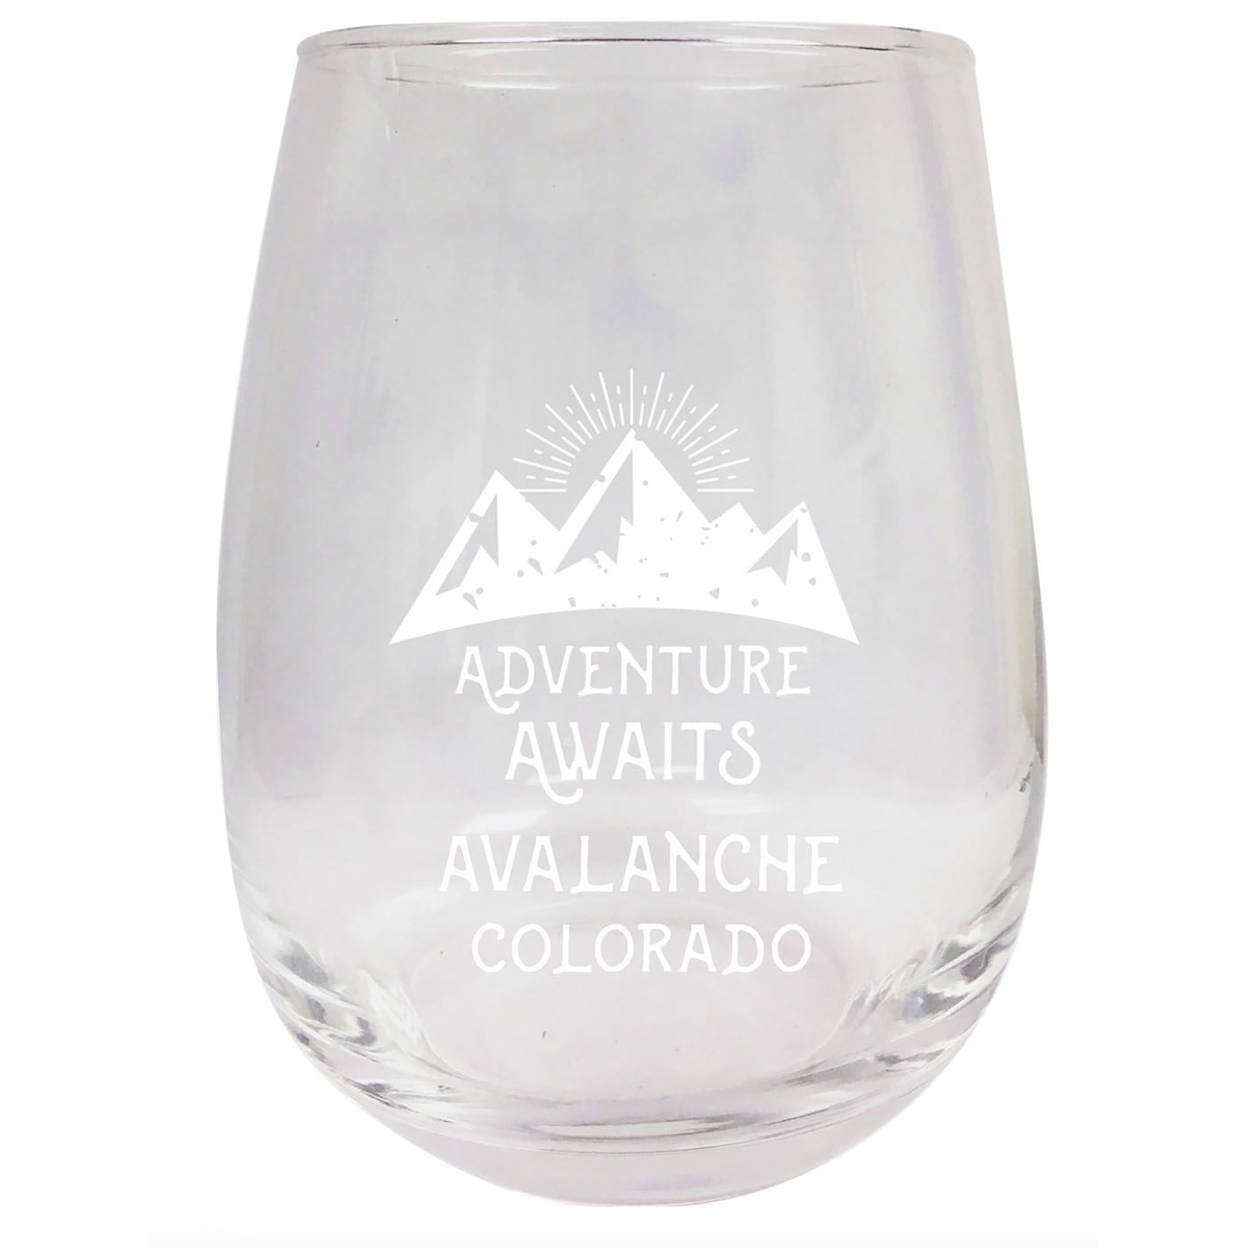 Colorado Engraved Stemless Wine Glass Duo